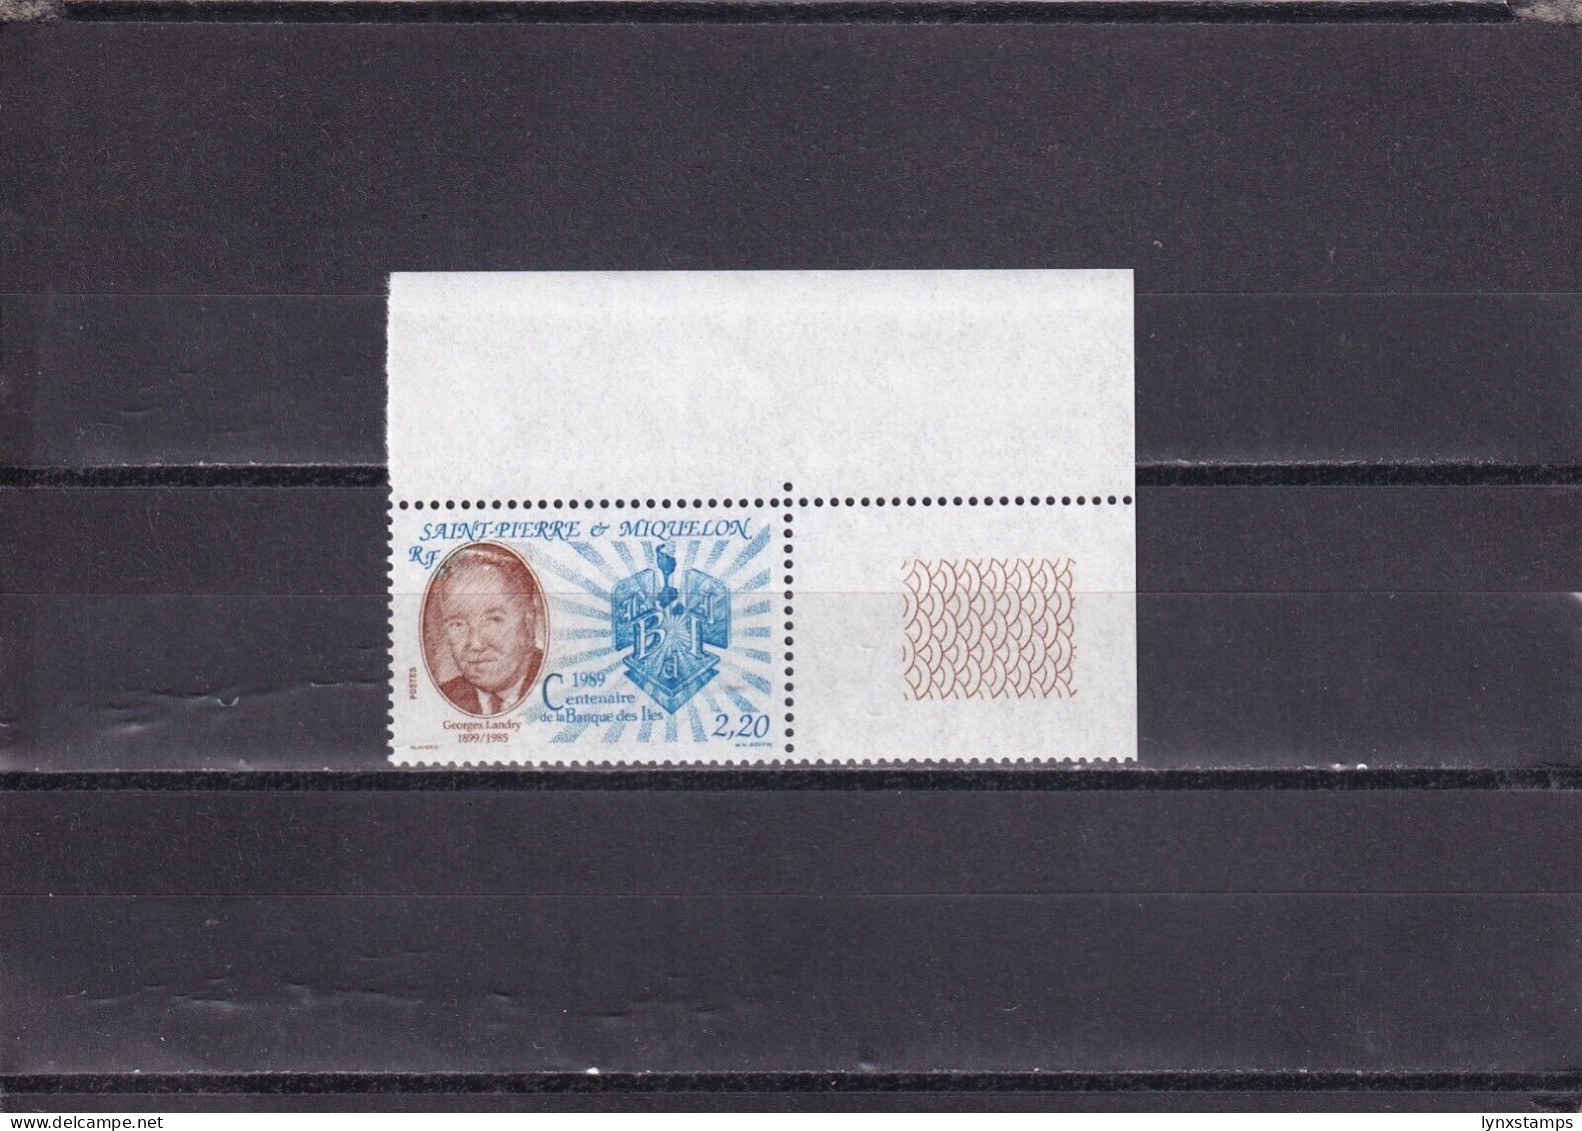 SA03 St Pierre Et Miquelon France 1989 100th Anniv Of Island Bank Mint Stamp - Neufs